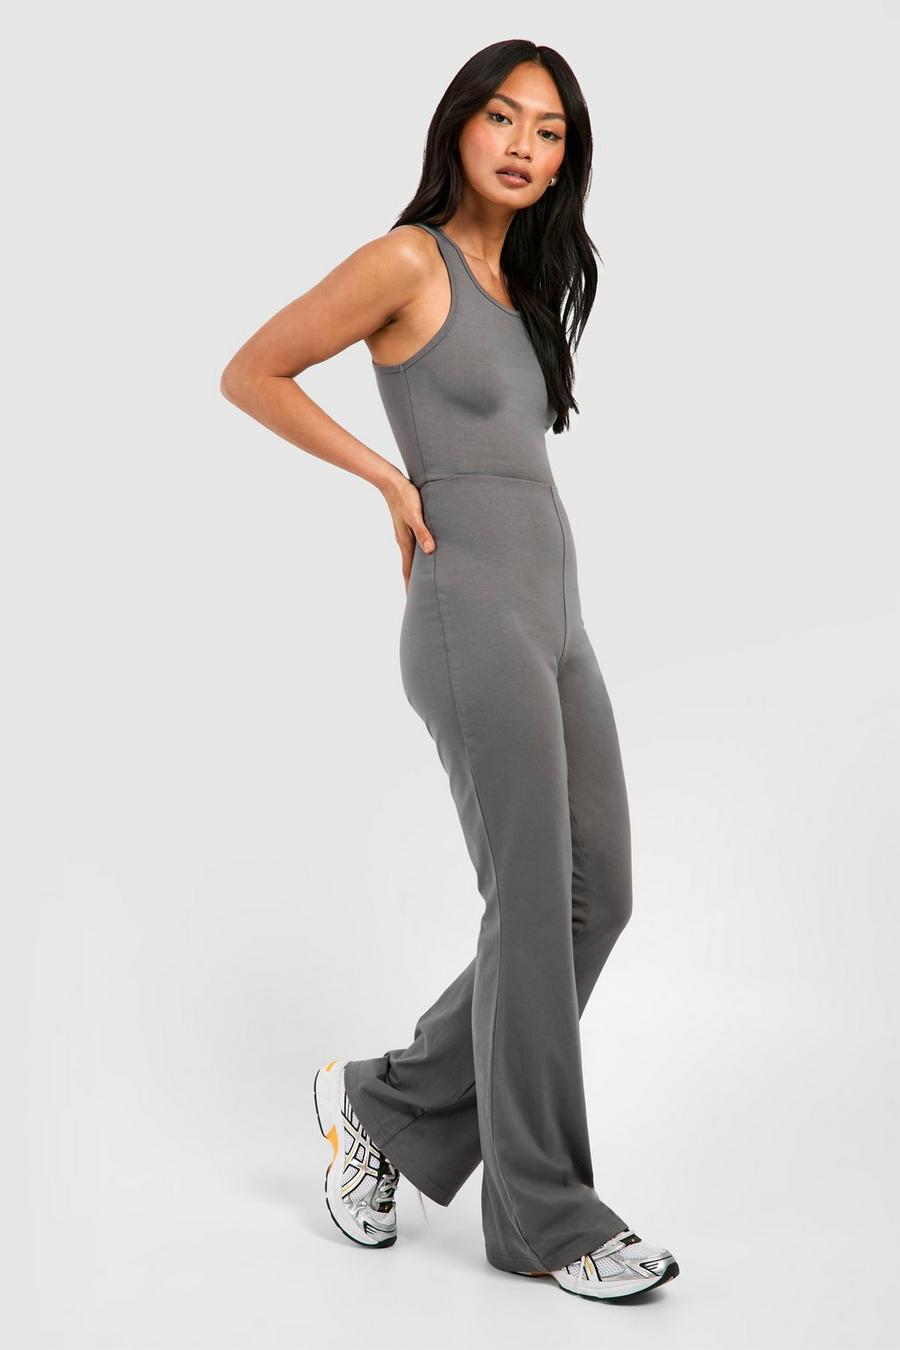 Charcoal Strappy Cotton Yoga Unitard Jumpsuit